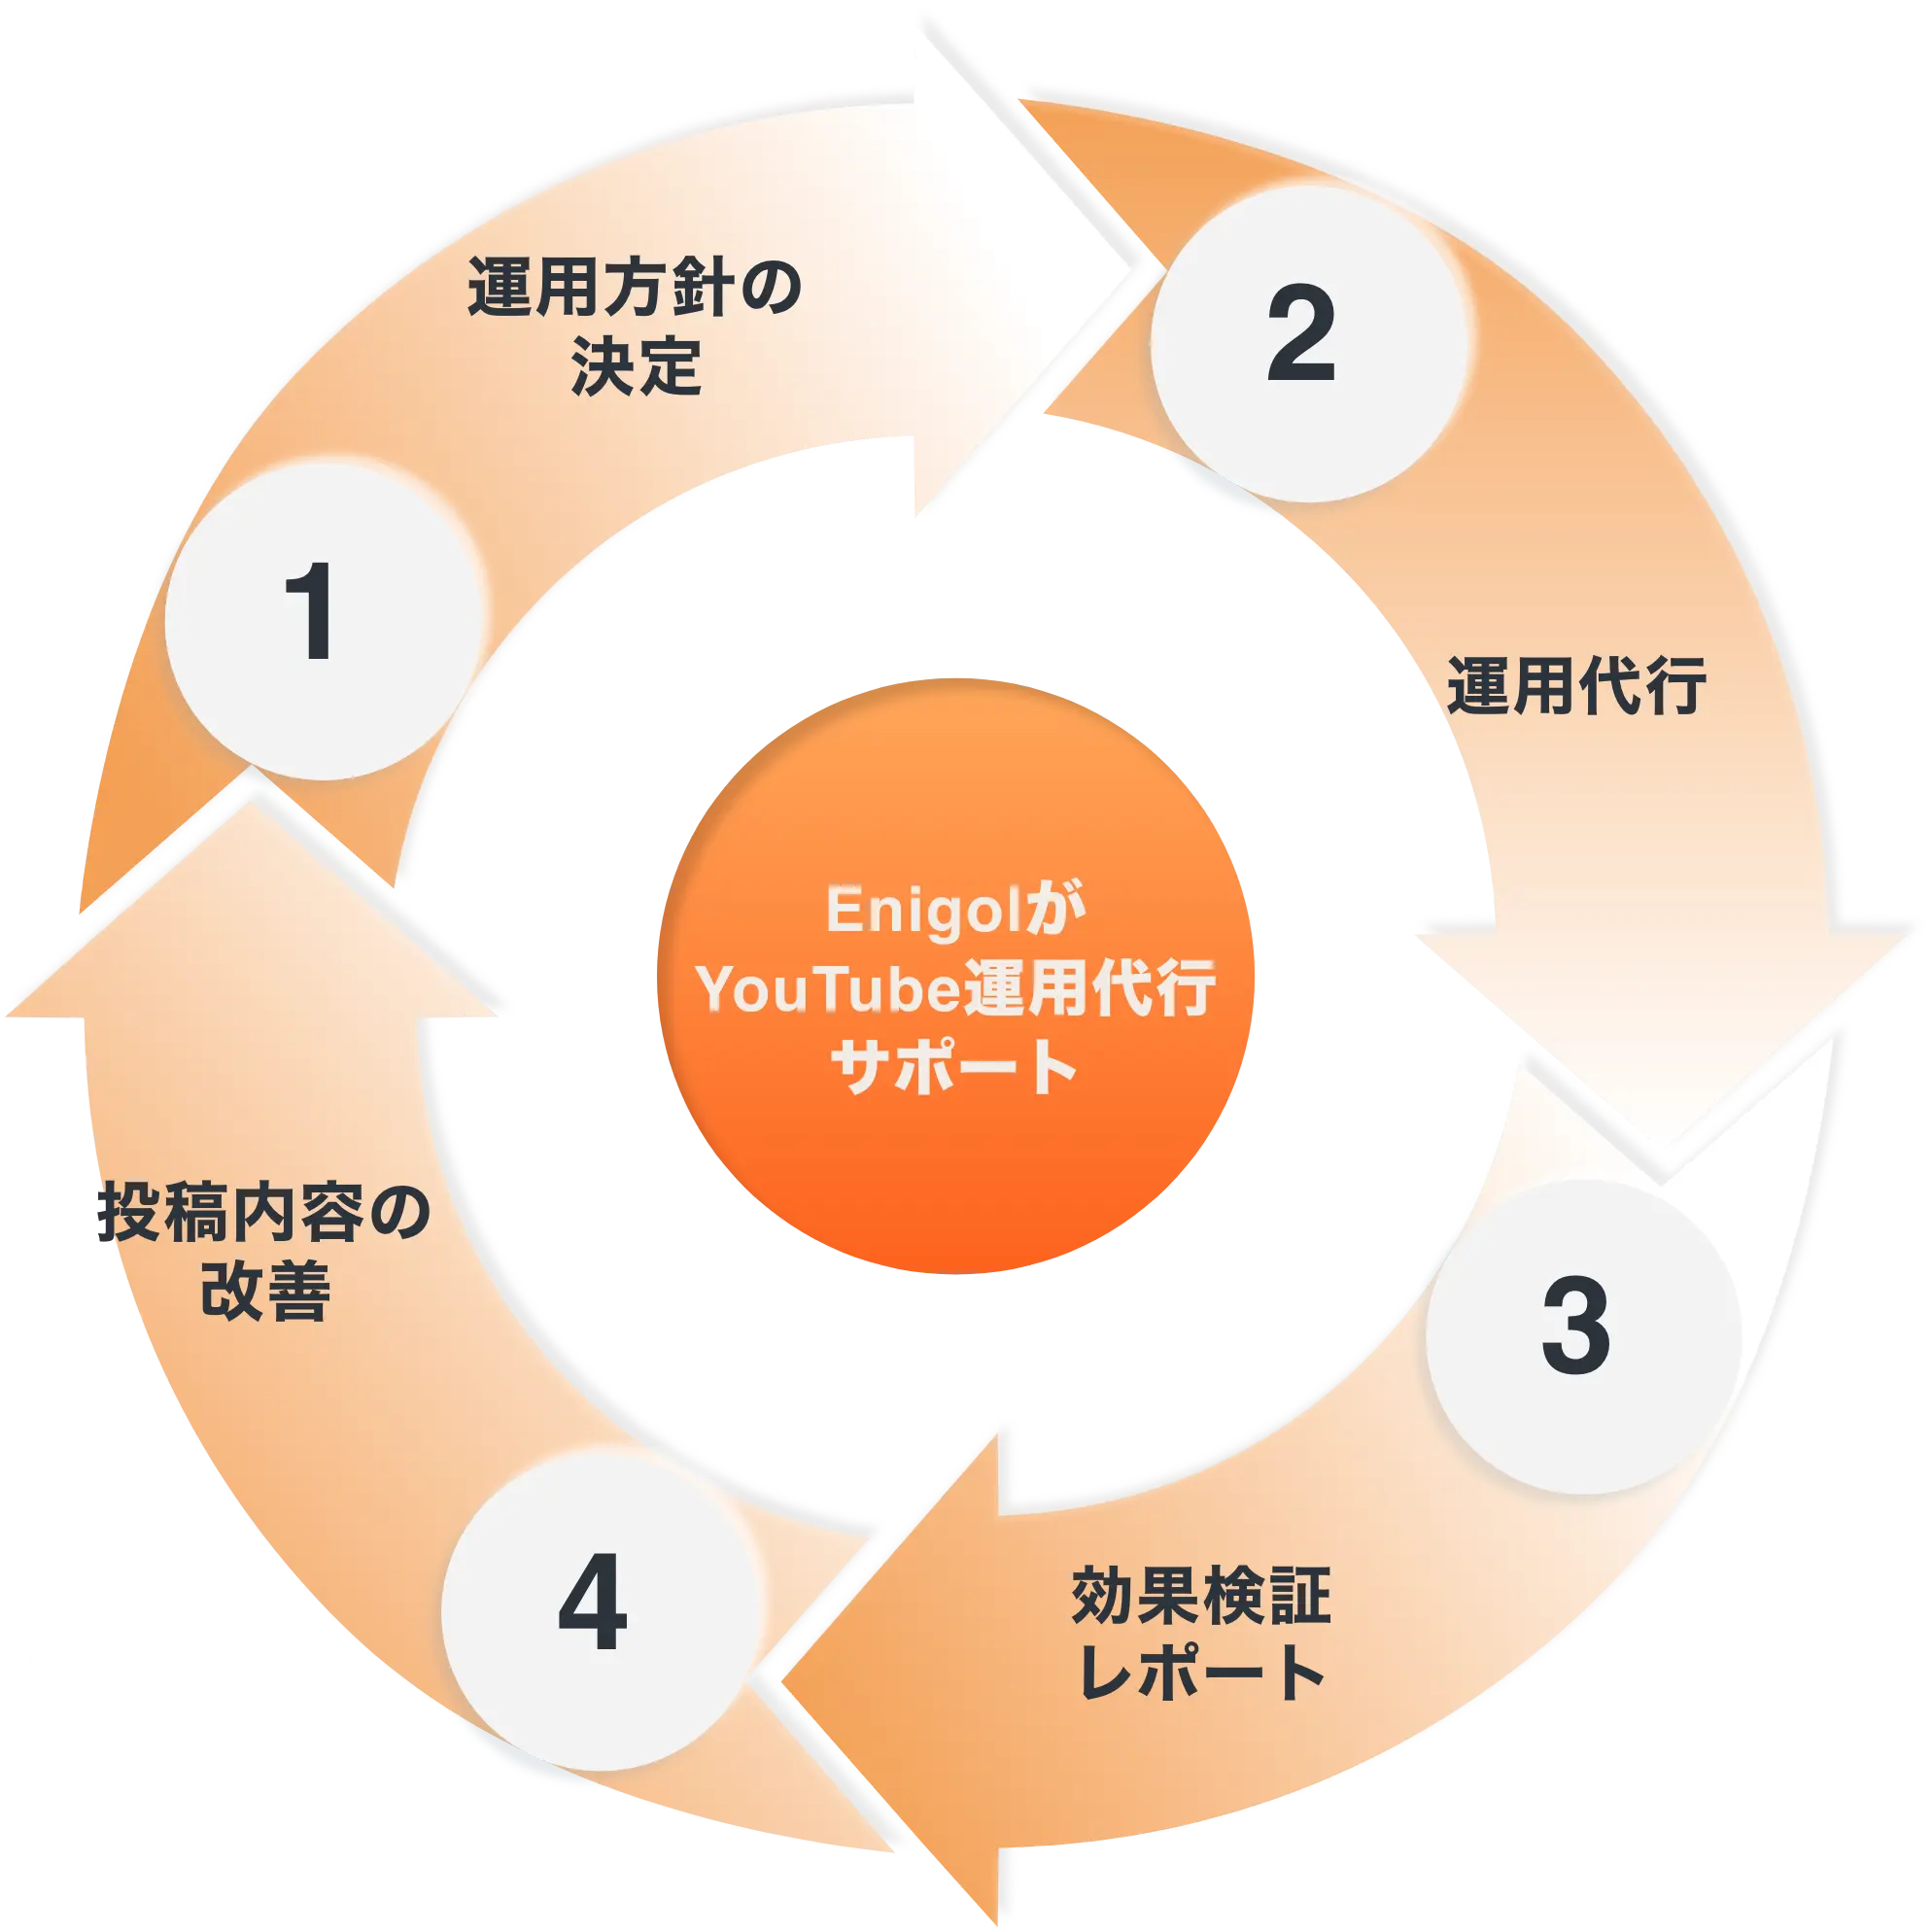 EnigolがYoutube運用代行するサイクル:①運用方針の決定、②運用代行、③効果検証レポート、④投稿内容の改善